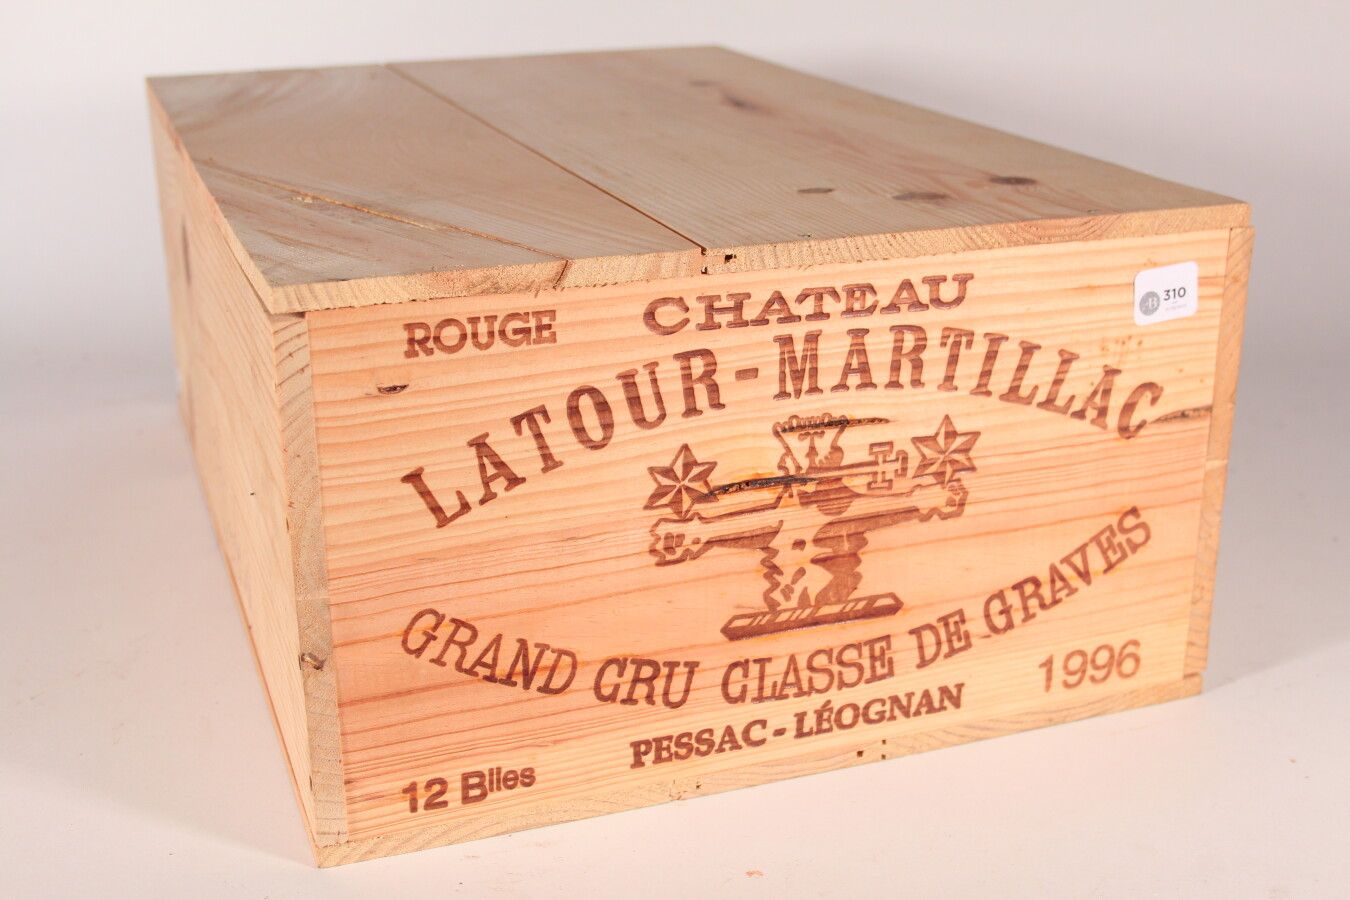 Null 1996 - Château Latour Martillac

Pessac-Léognan - 12 botellas